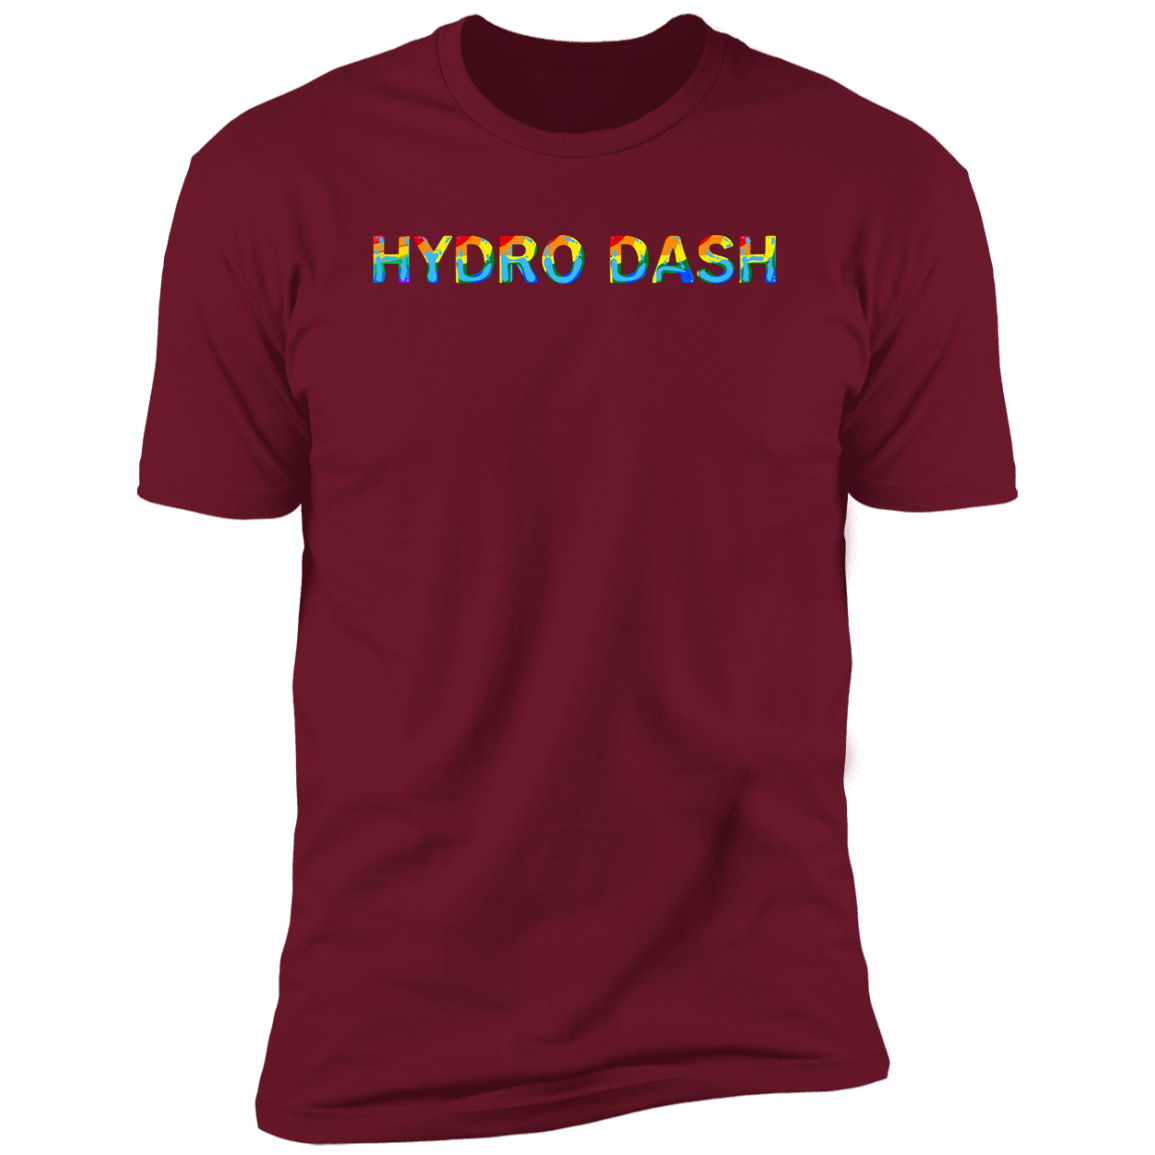  Hydro Dash Pride 2023  t-shirt, dog pride dog Hydro dash shirt for humans, in cardinal red